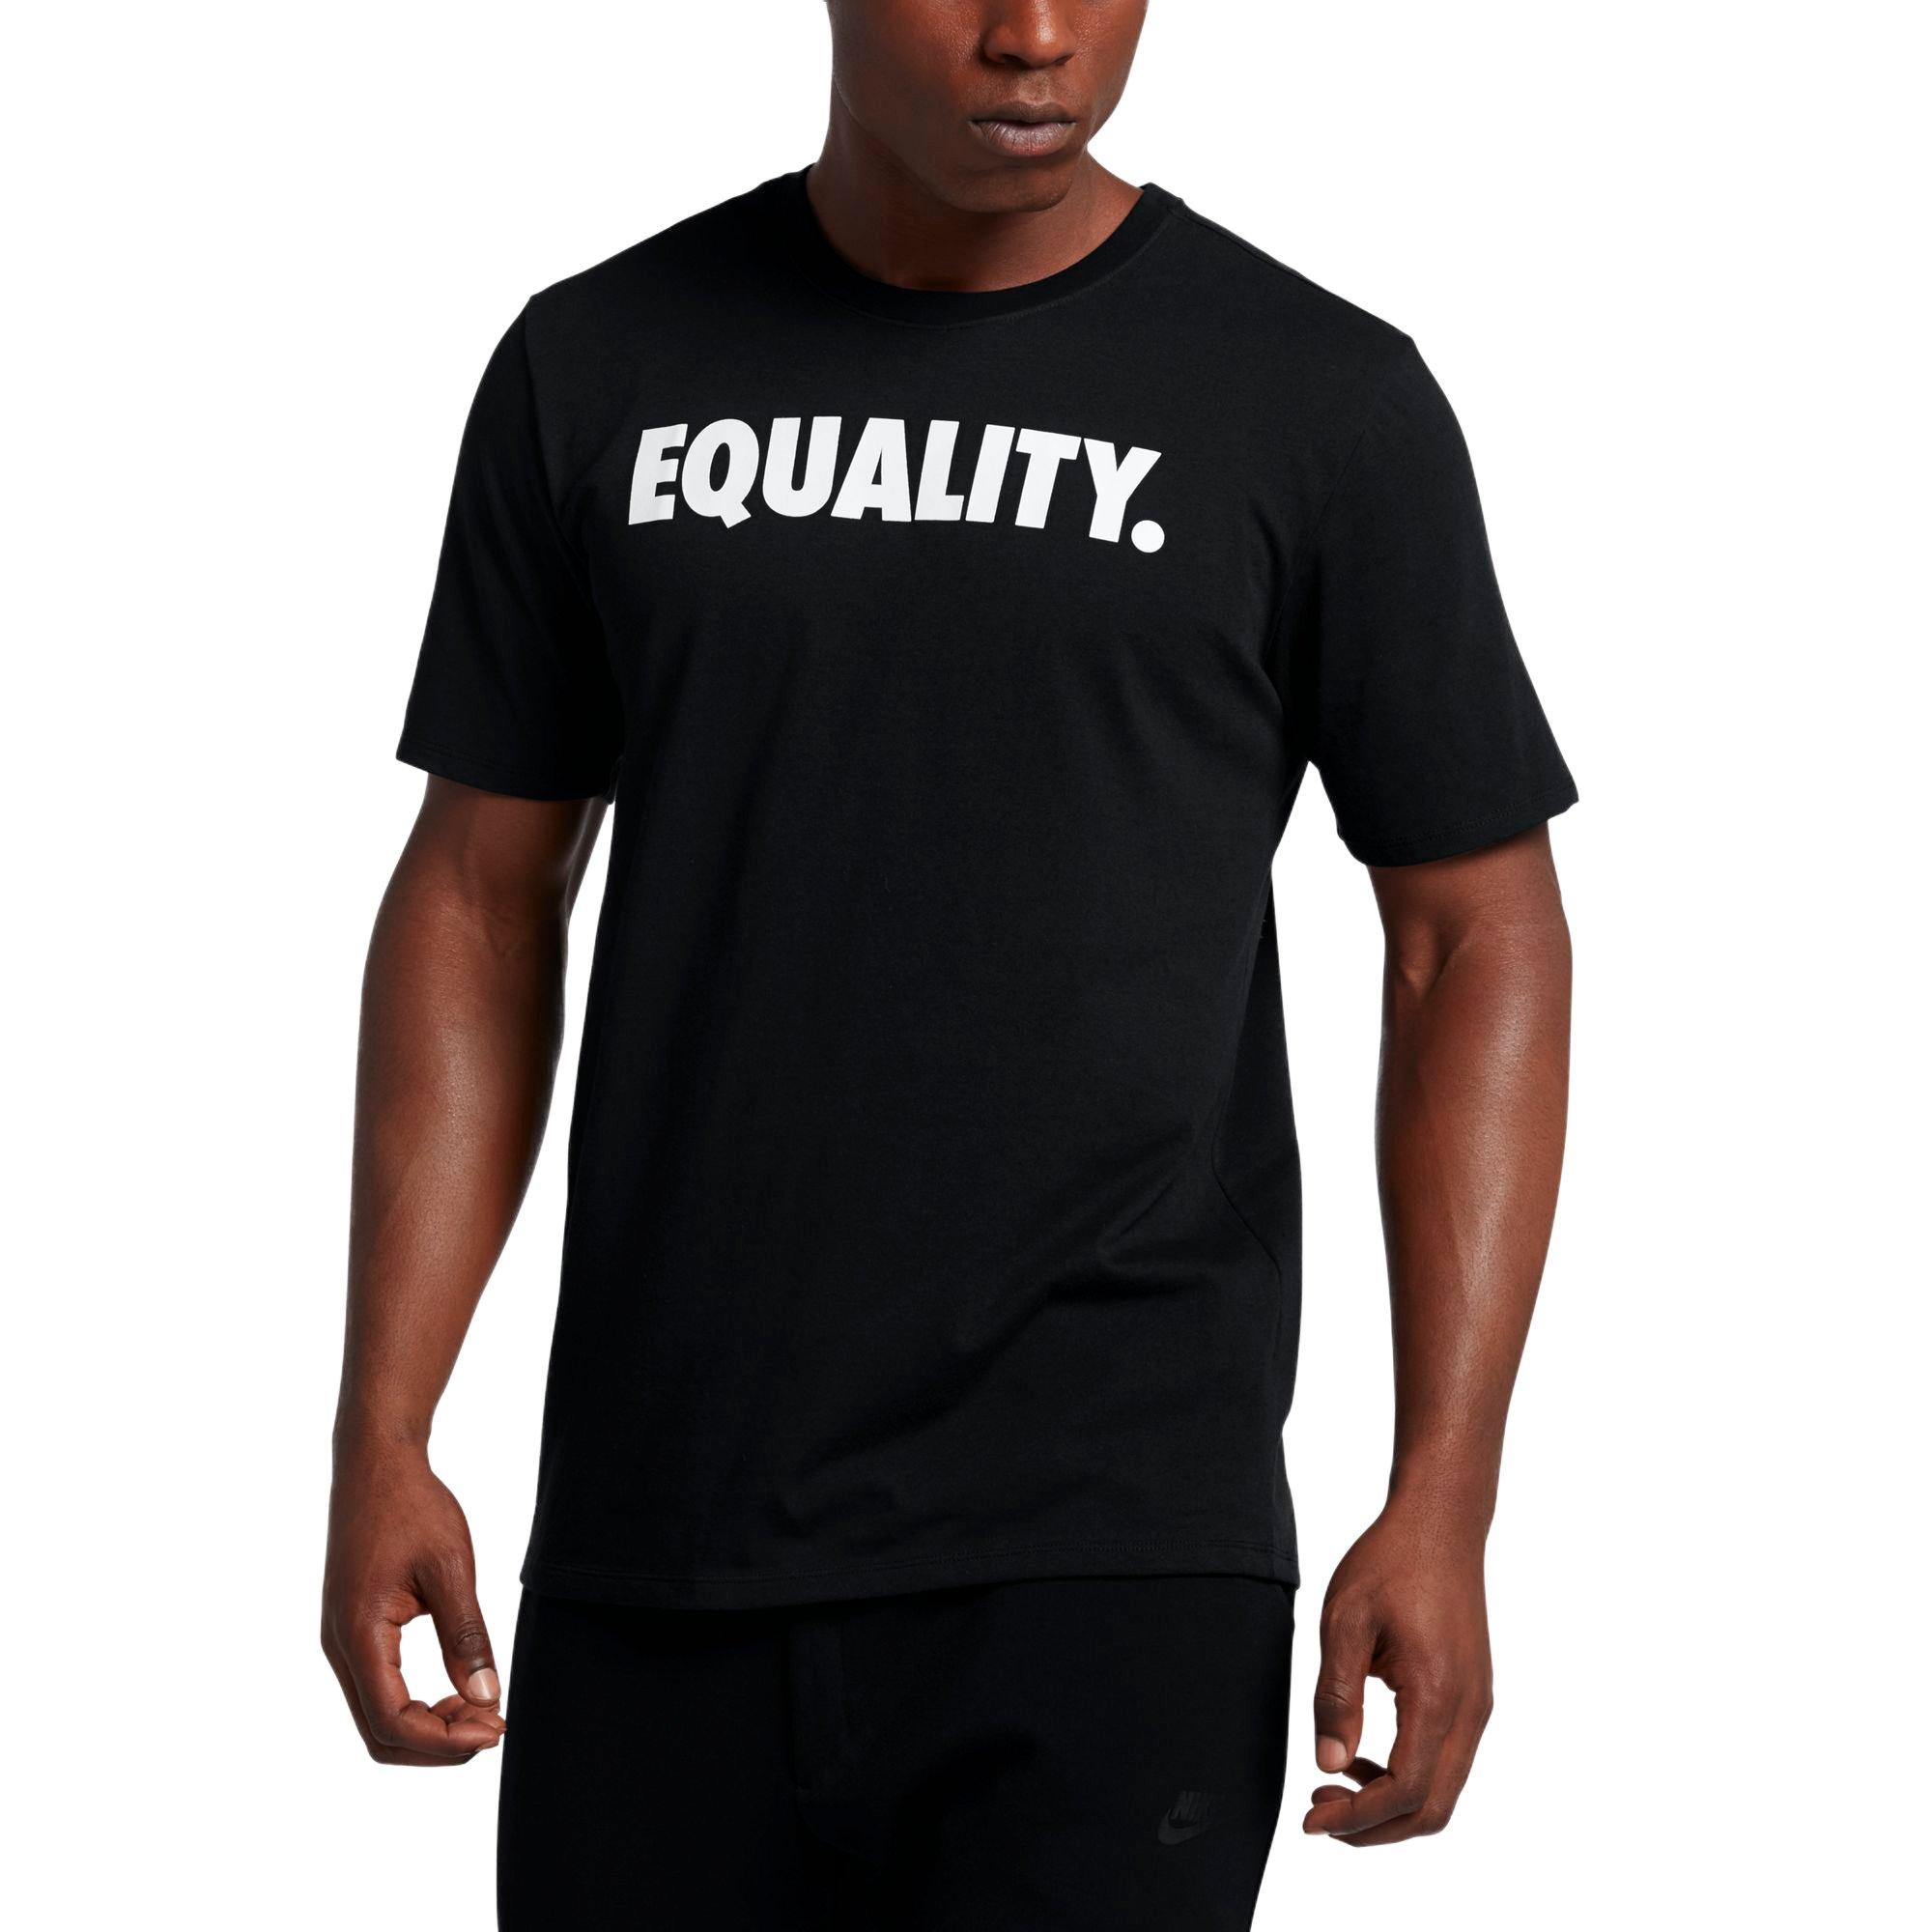 nike equality shirt rainbow